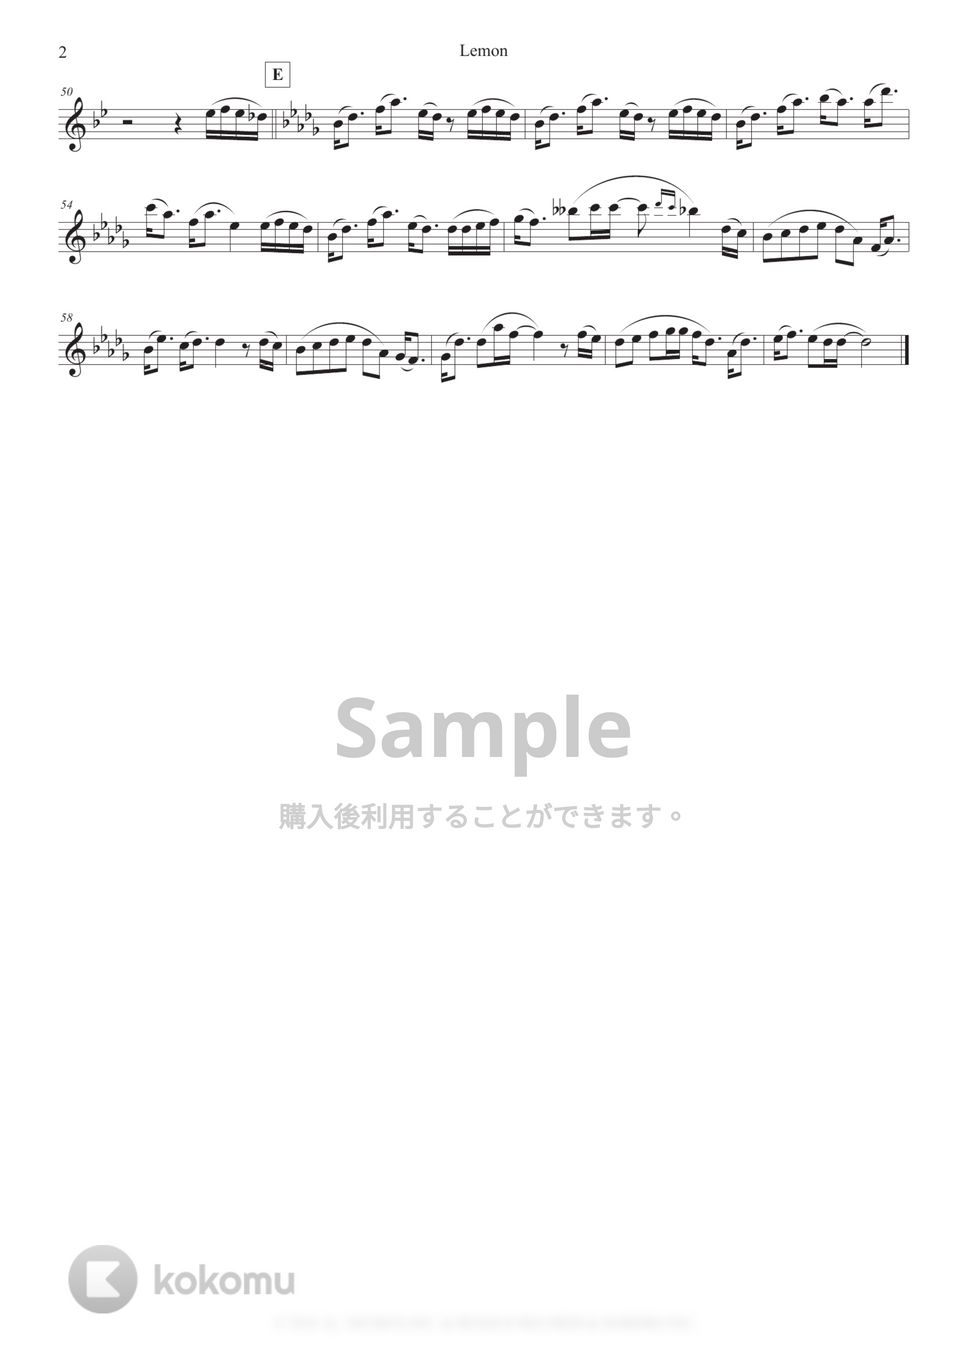 米津玄師 - Lemon (in Bb/上級 Original key) by Sumika